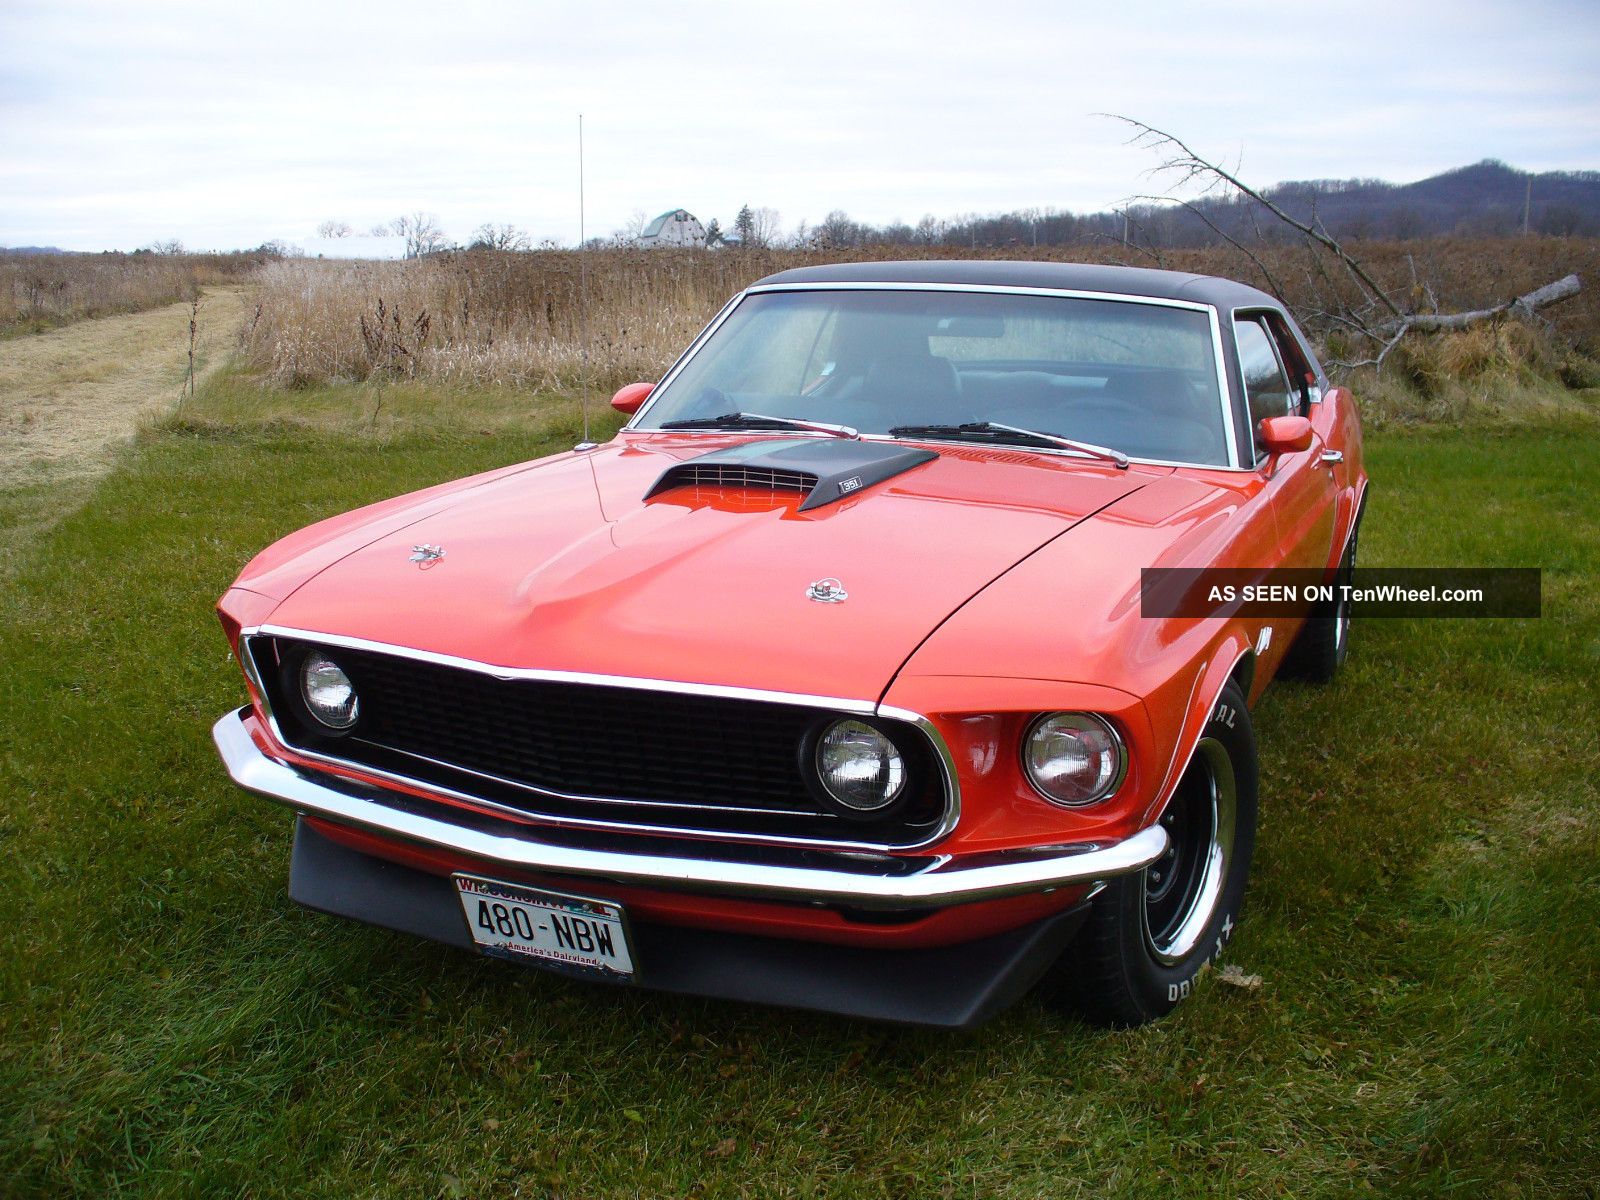 1969 Ford Mustang Boss 429 - характеристики, фото, цена.